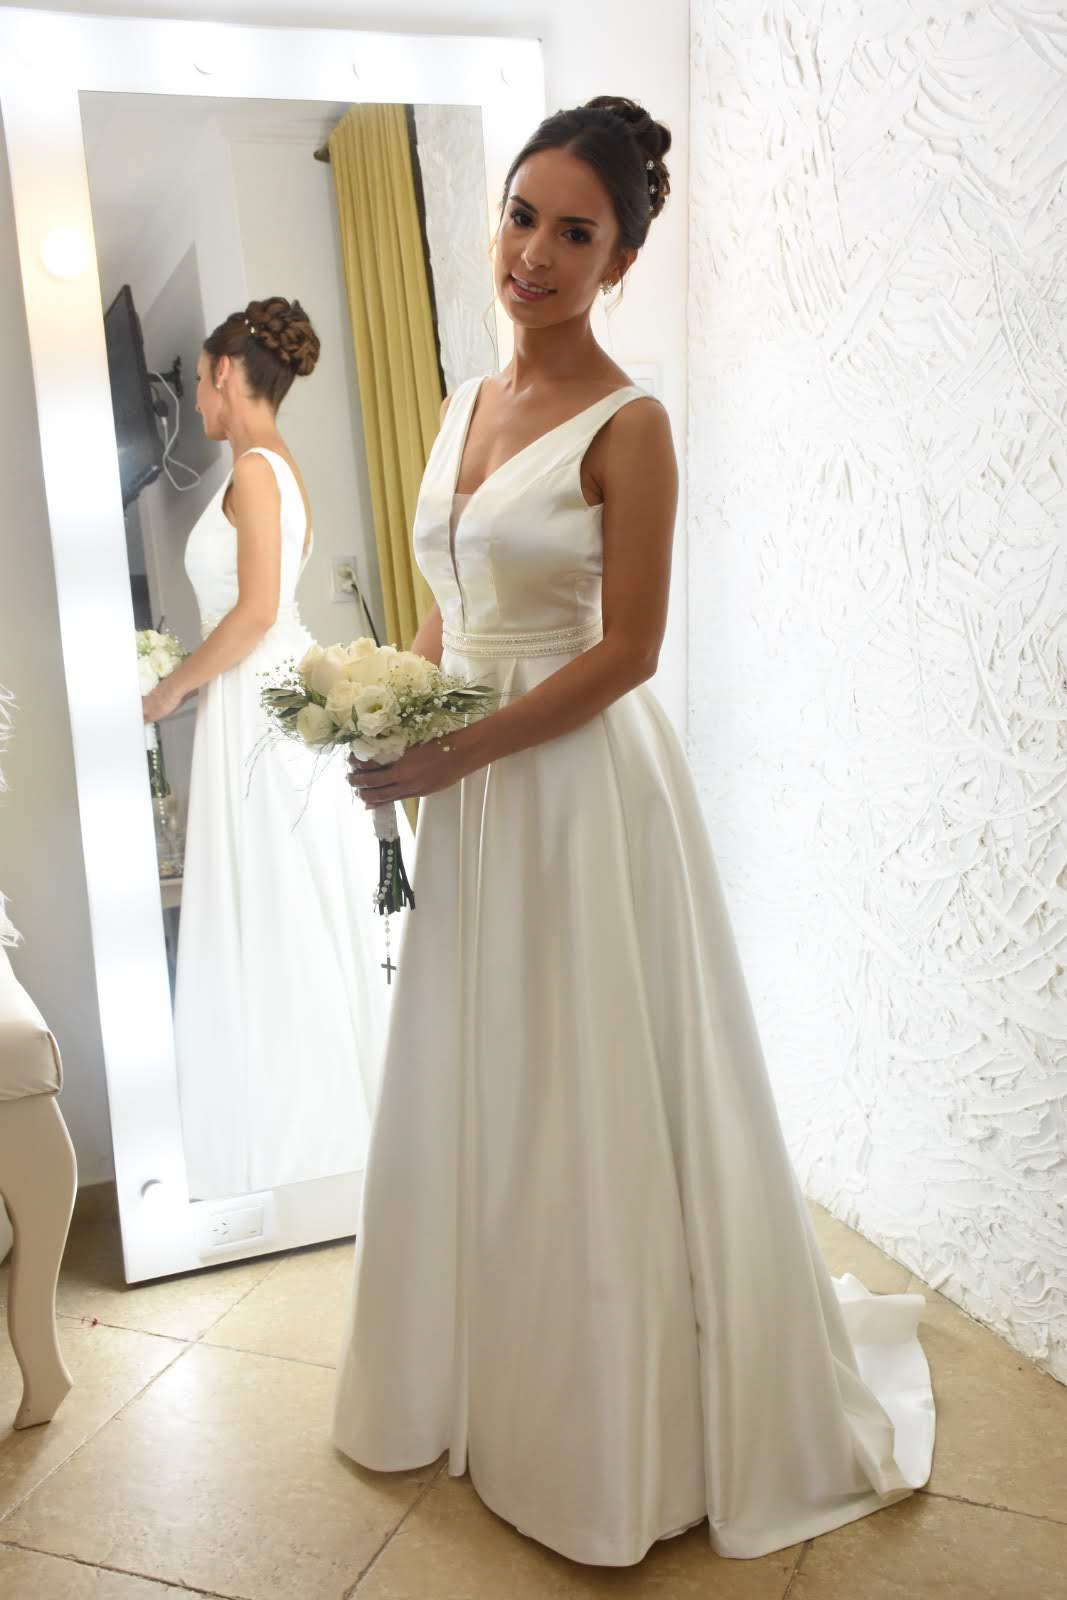 Image may contain: wall, wedding dress and bride